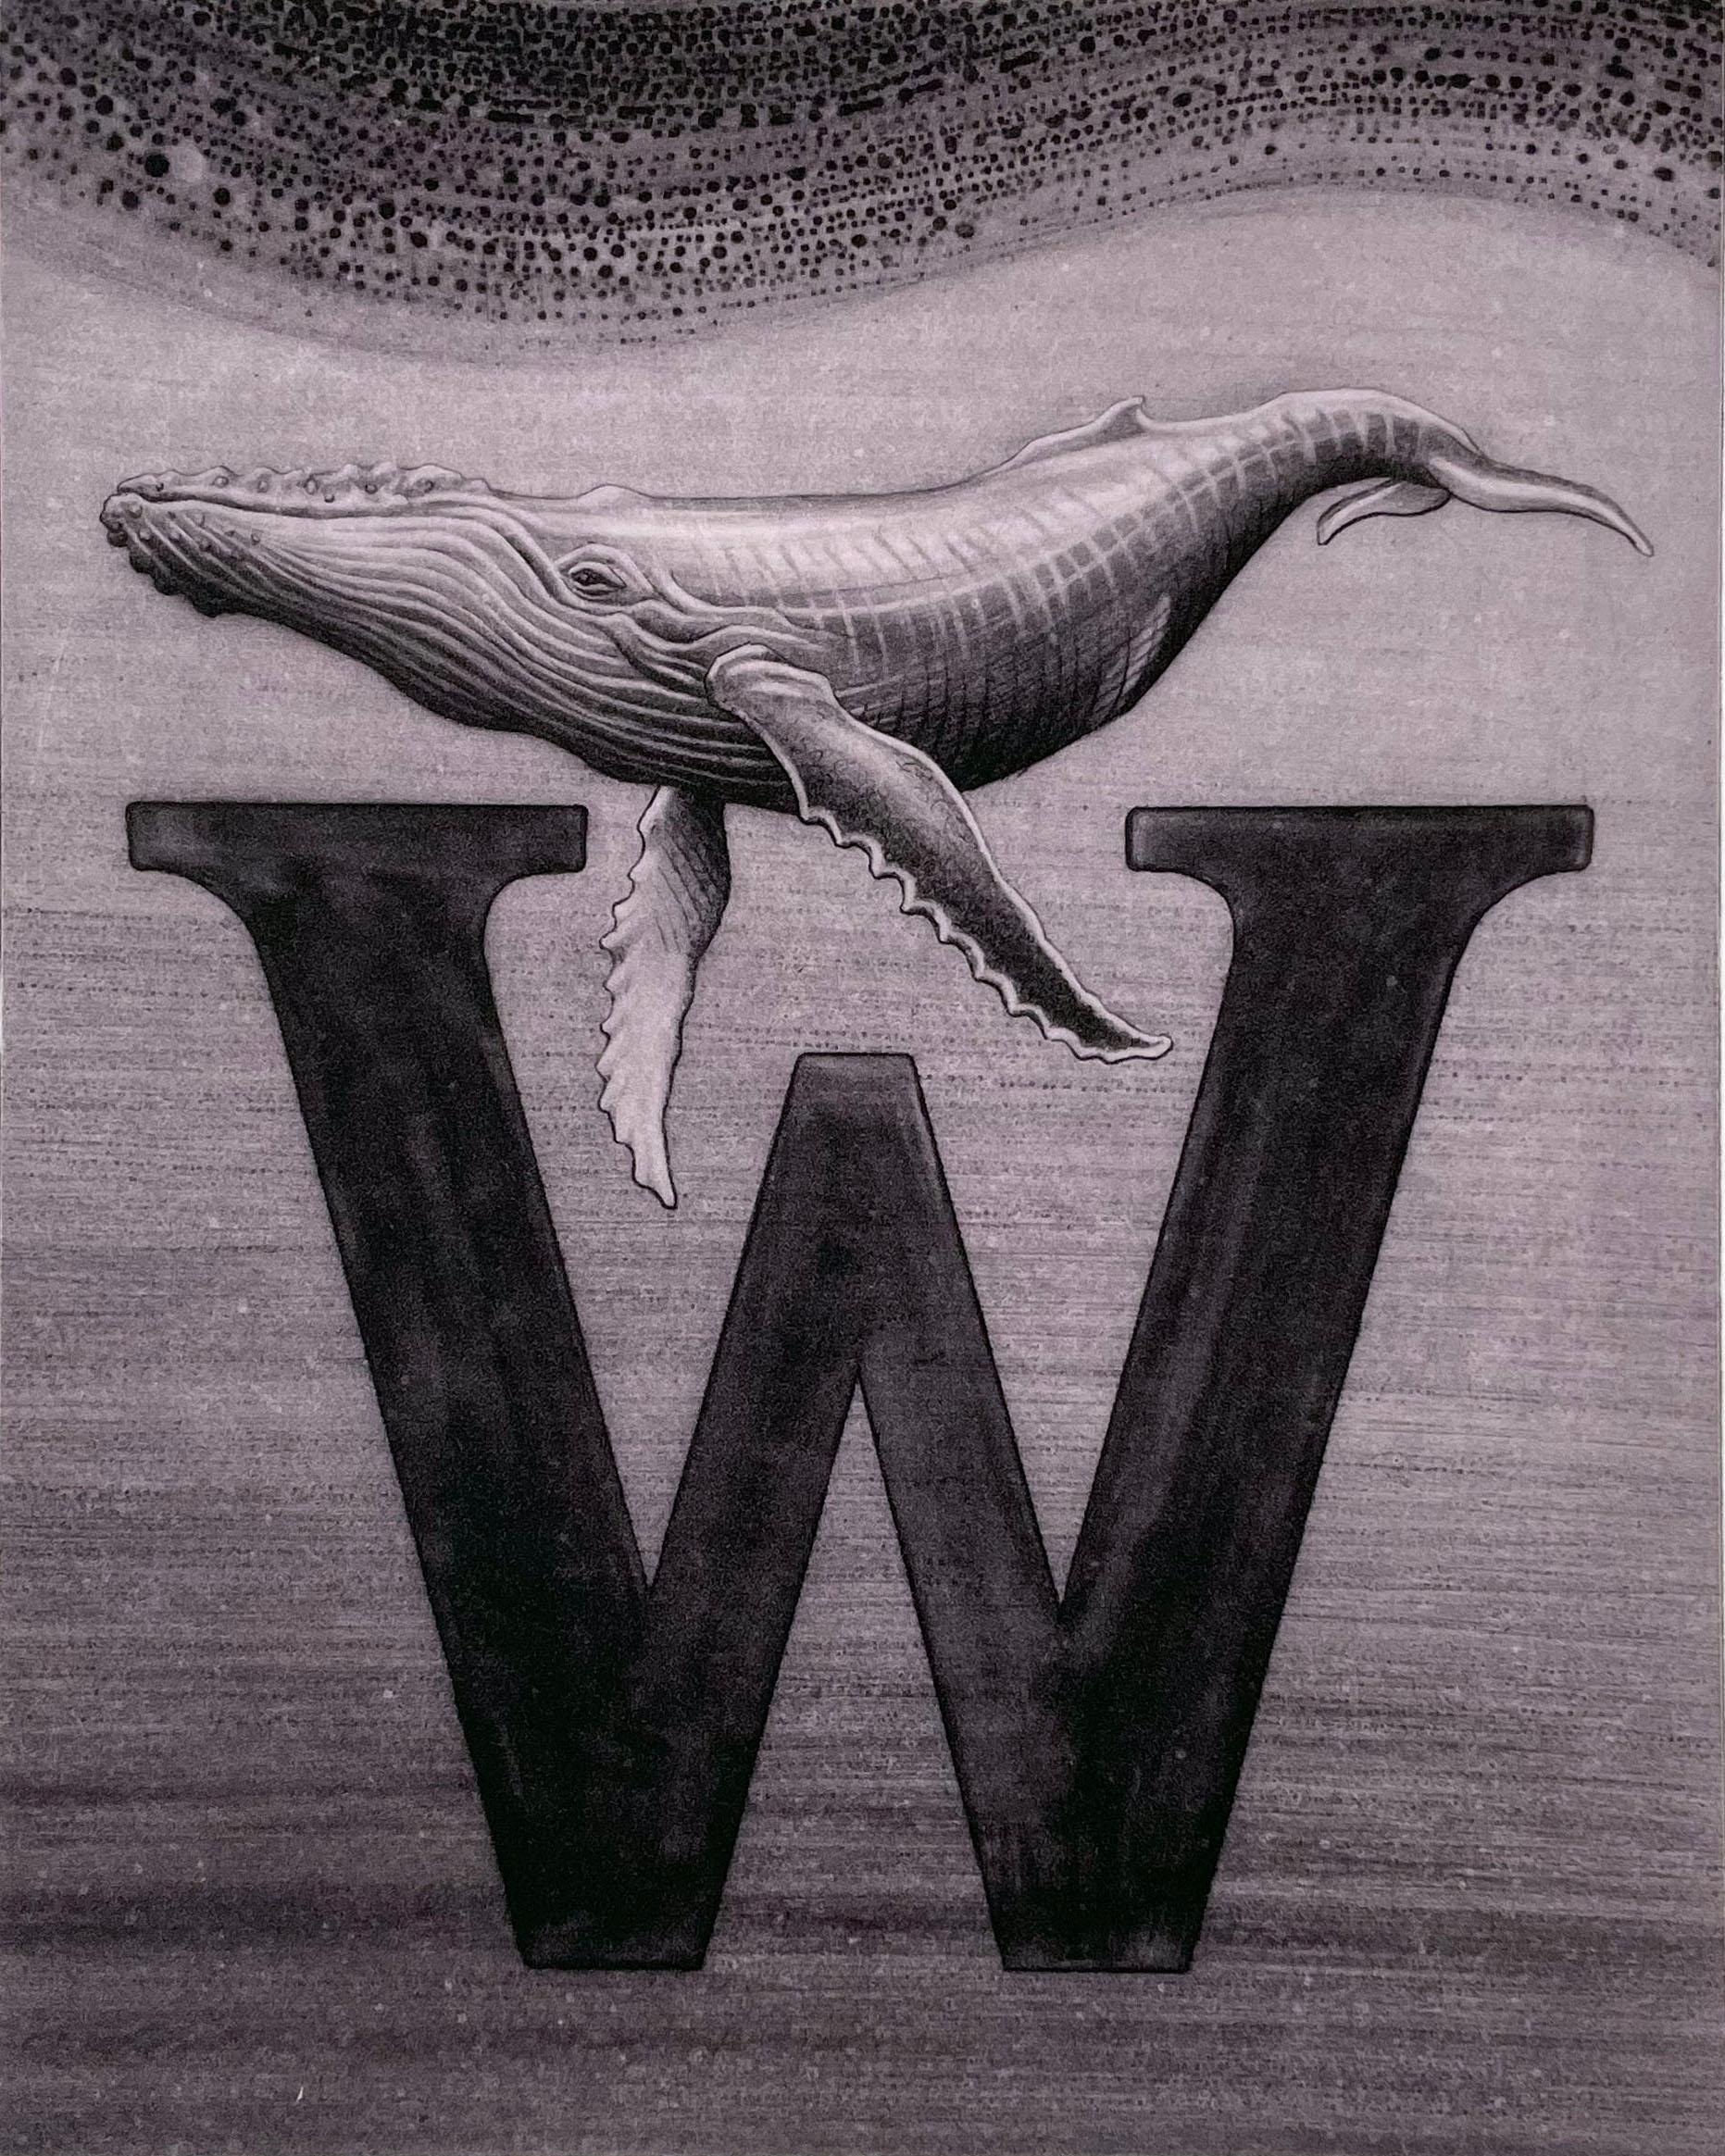 Kelvin Mann Animal Print - "W", for whale in this animal alphabet series